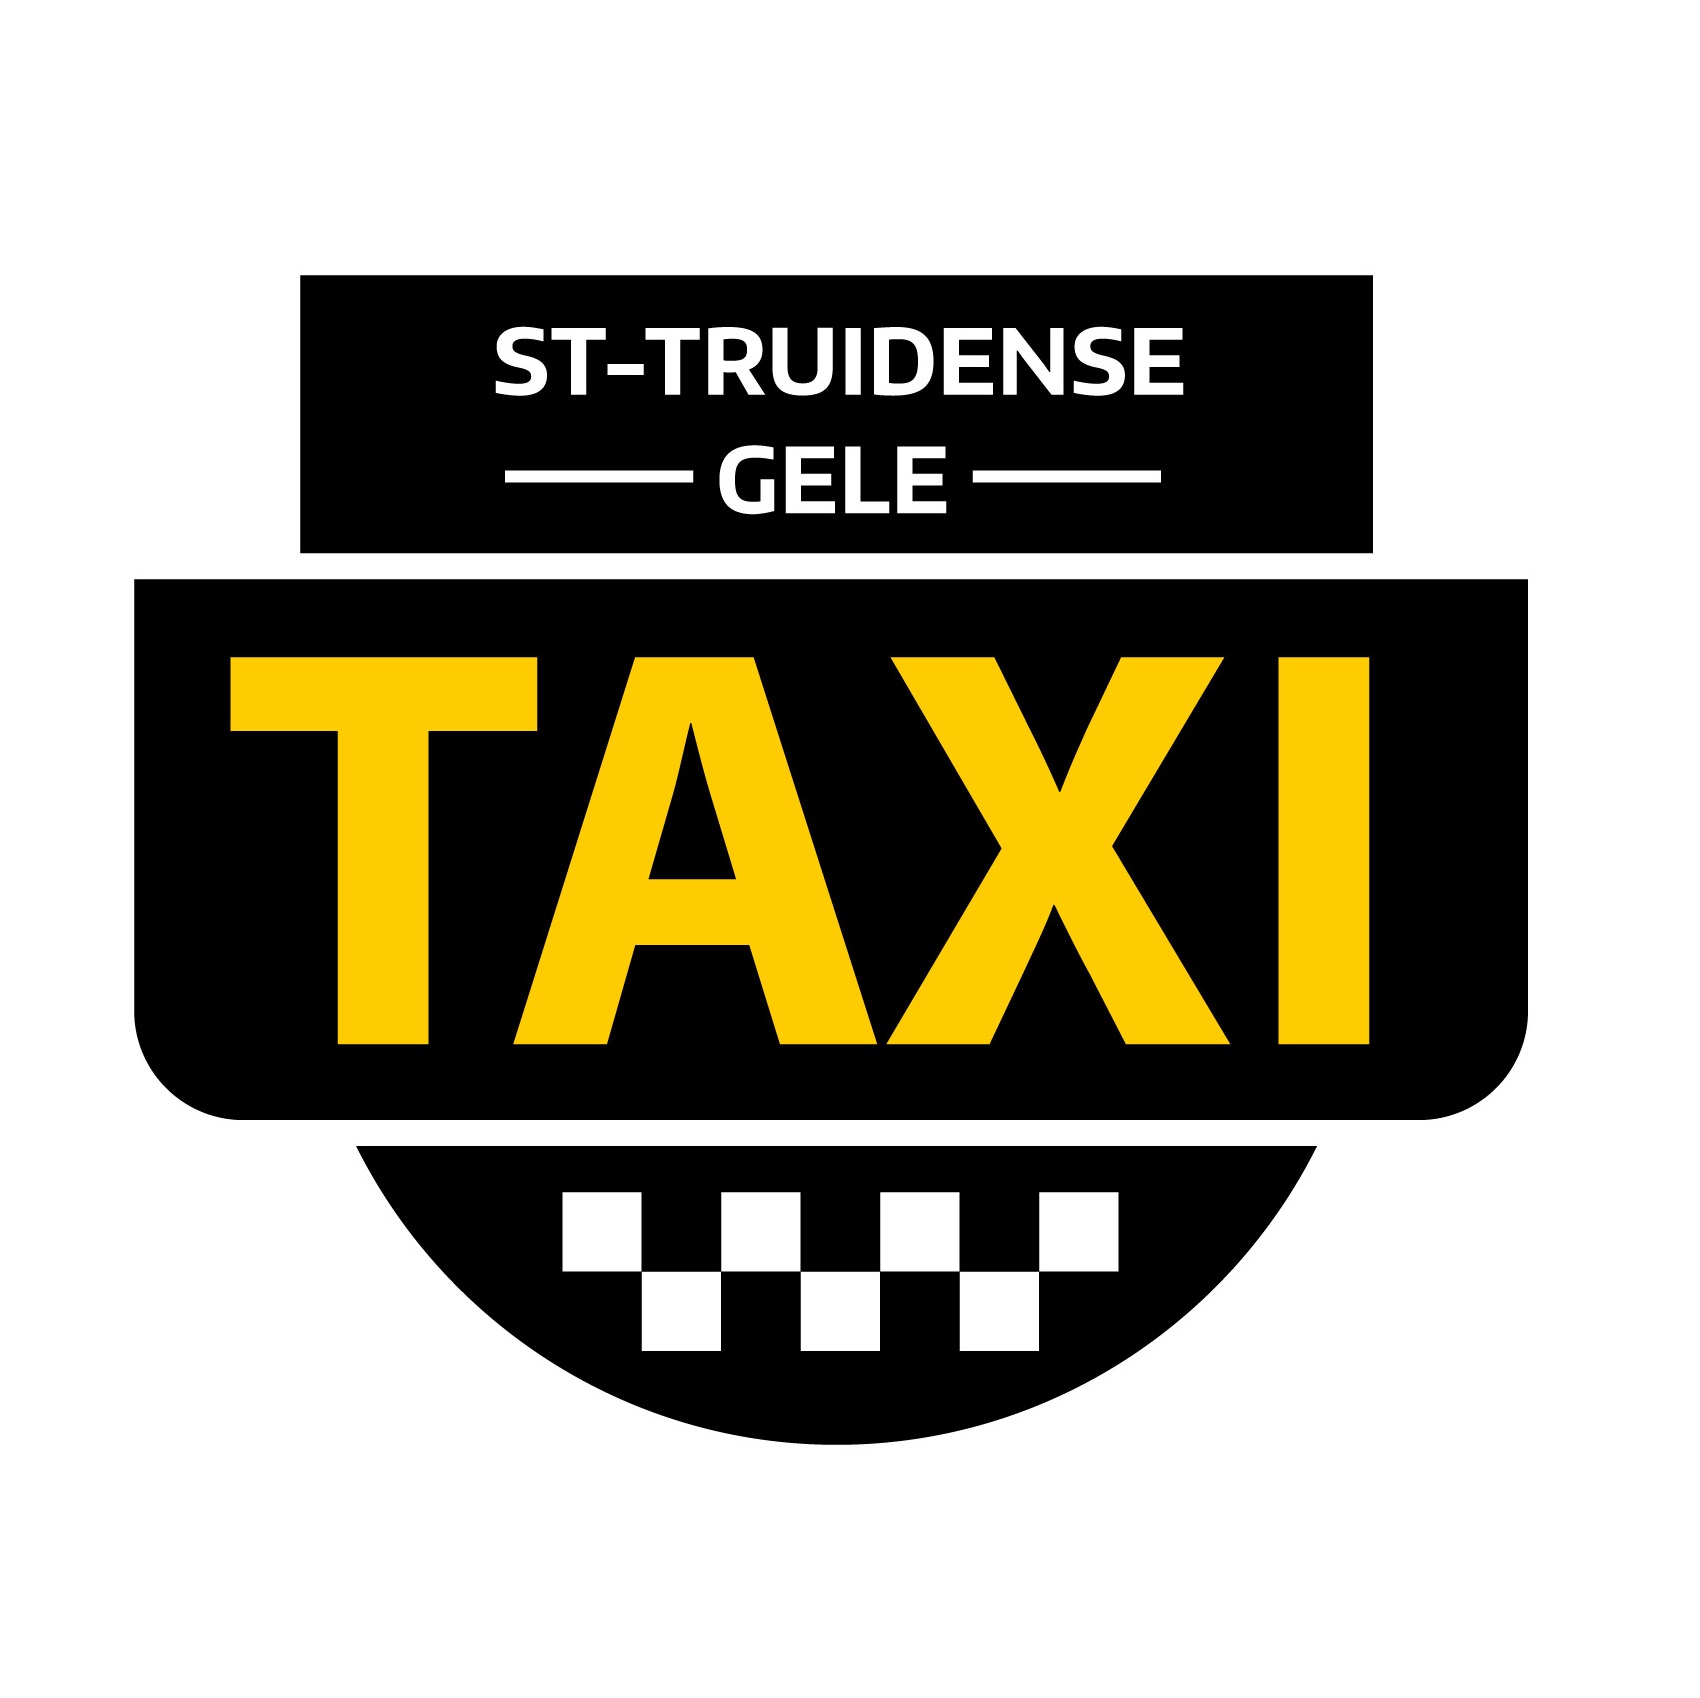 taxibedrijven Sint-Truiden | St-Truidense Gele Taxi